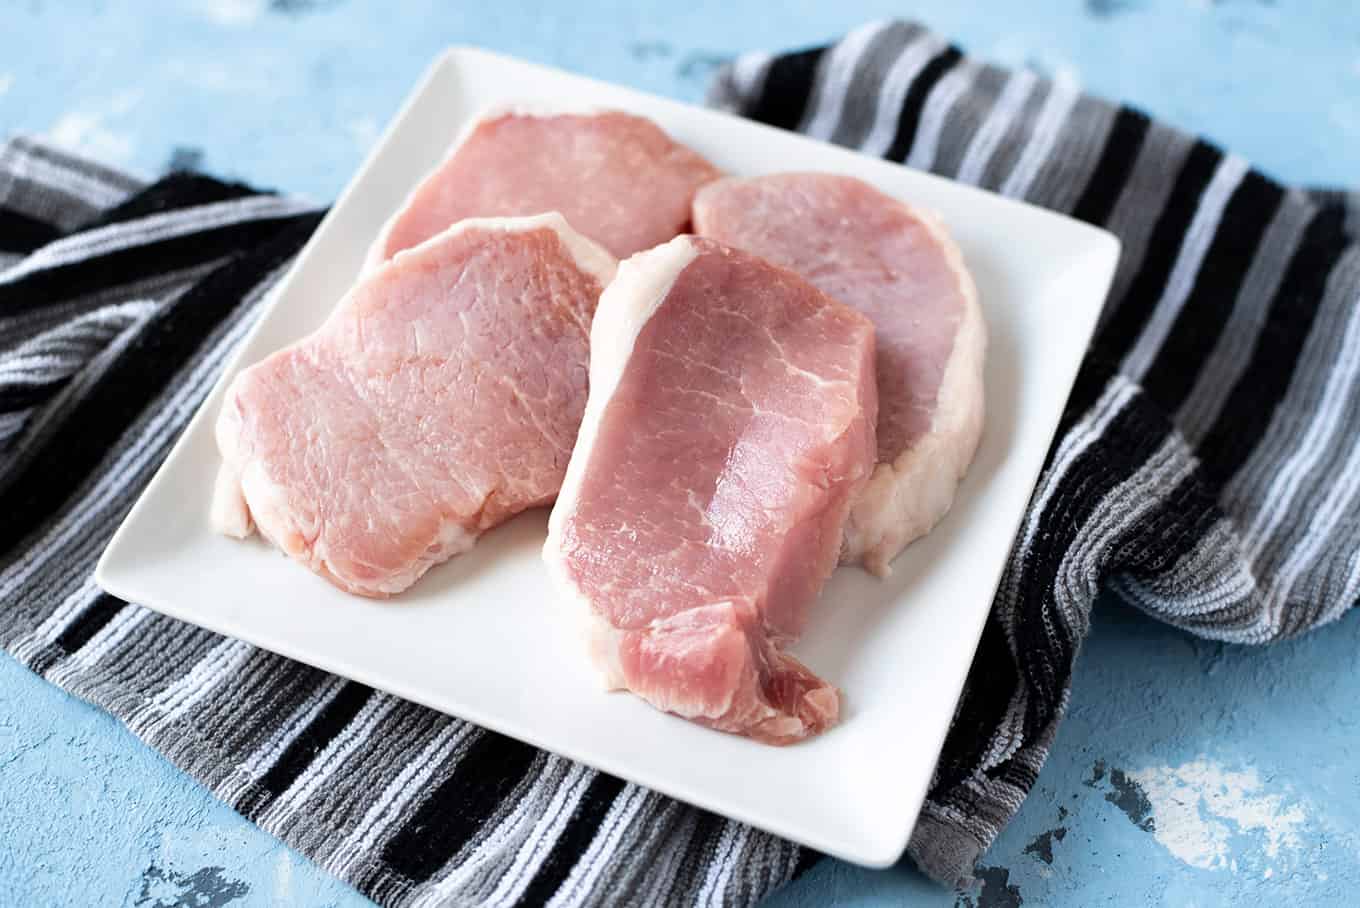 Sliced raw pork chops on a plate.